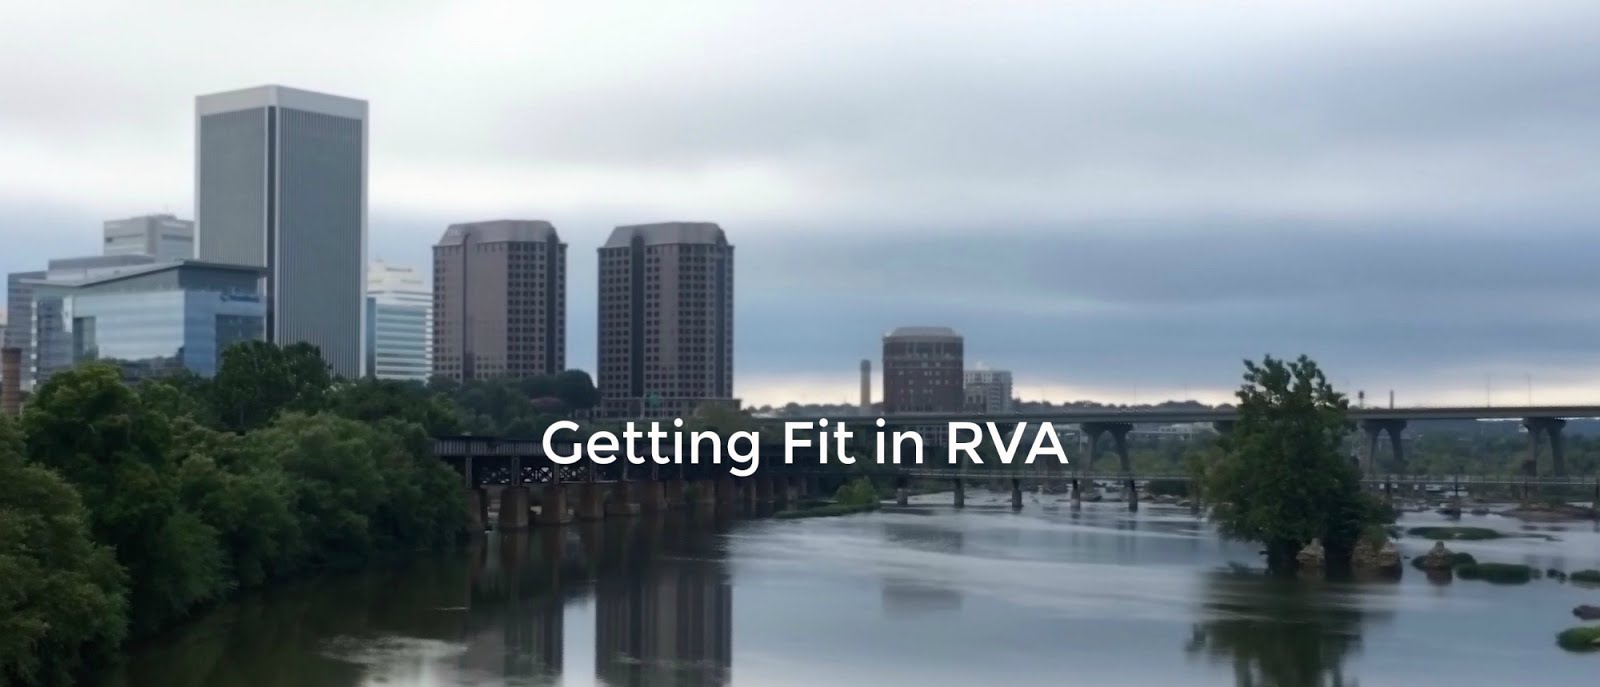 Getting Fit in RVA